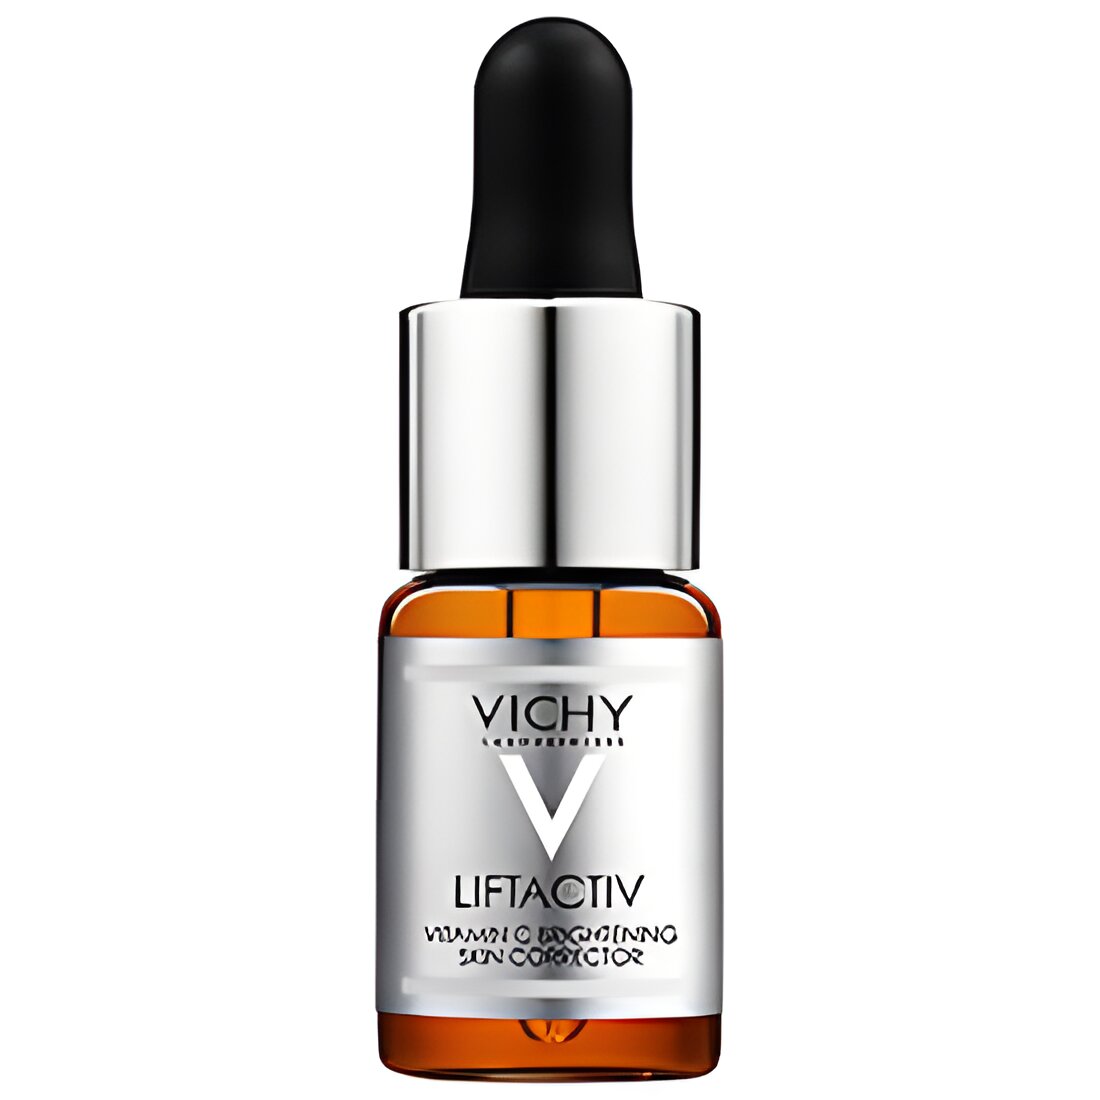 Free VICHY Vitamin C Serum And Brightening Skin Corrector